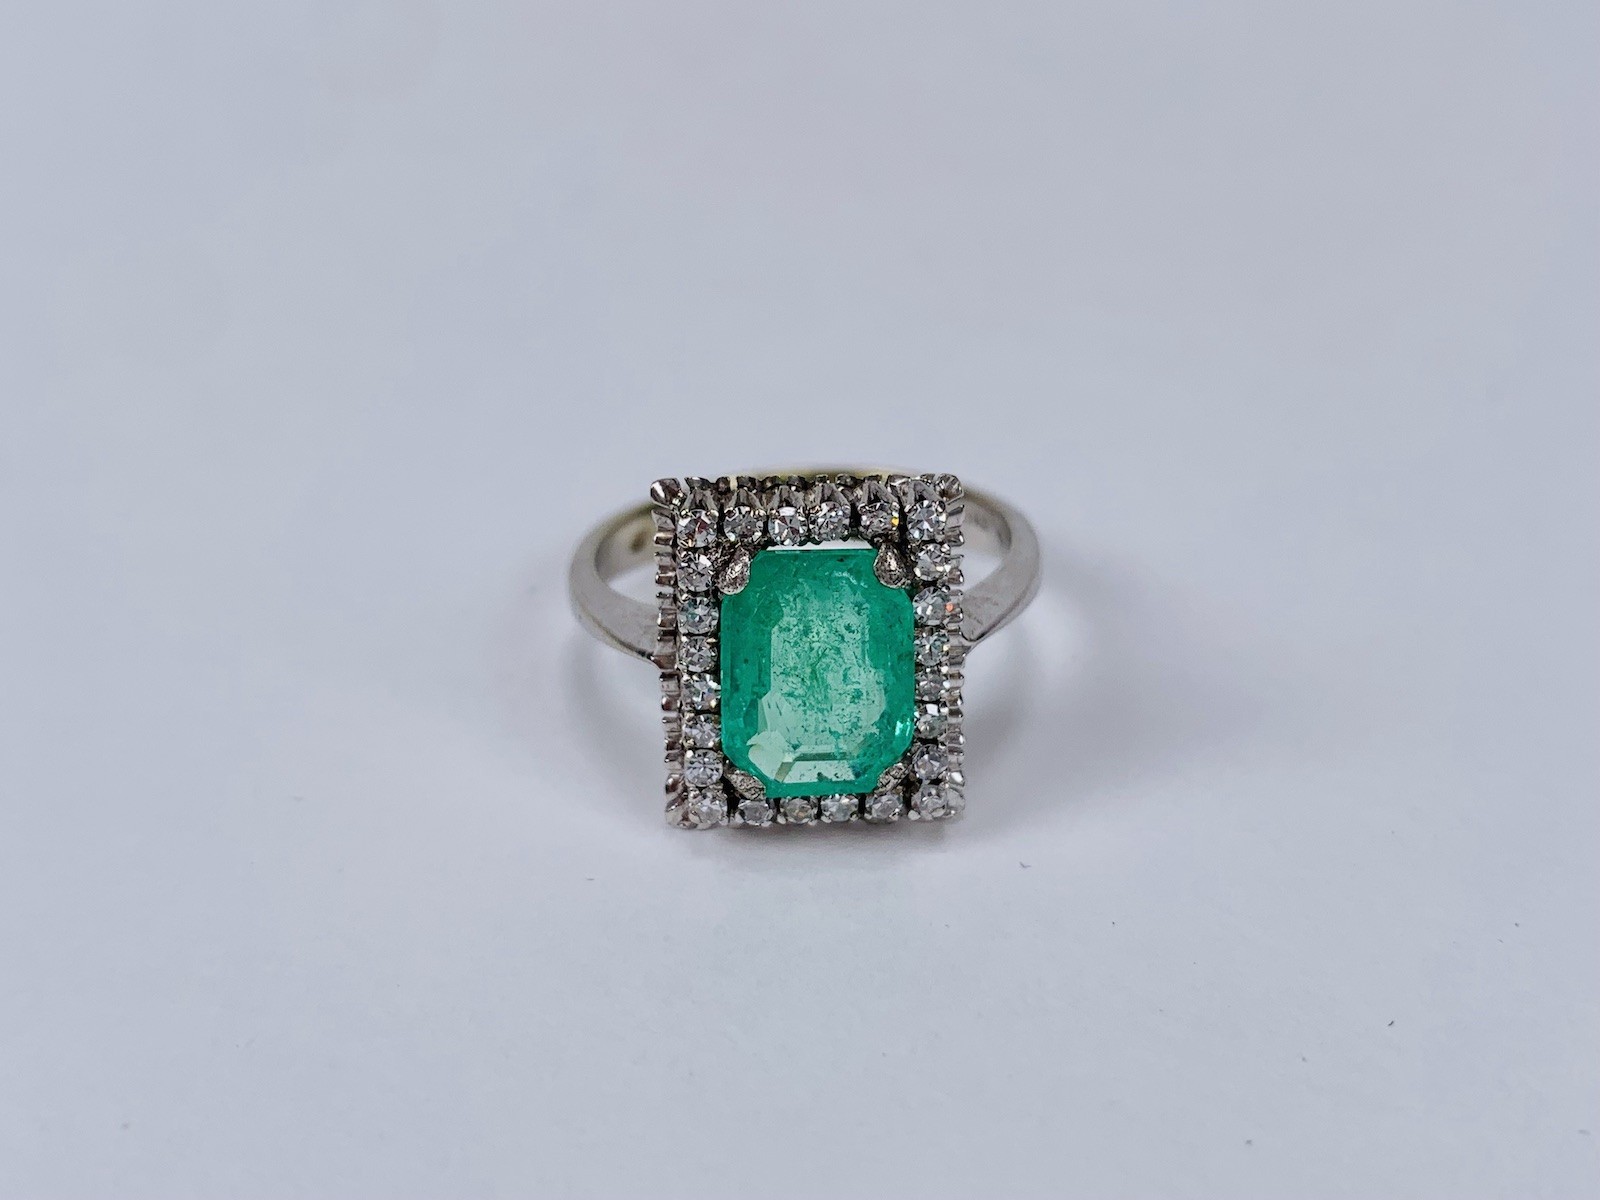 Prsten s diamanty a smaragdy